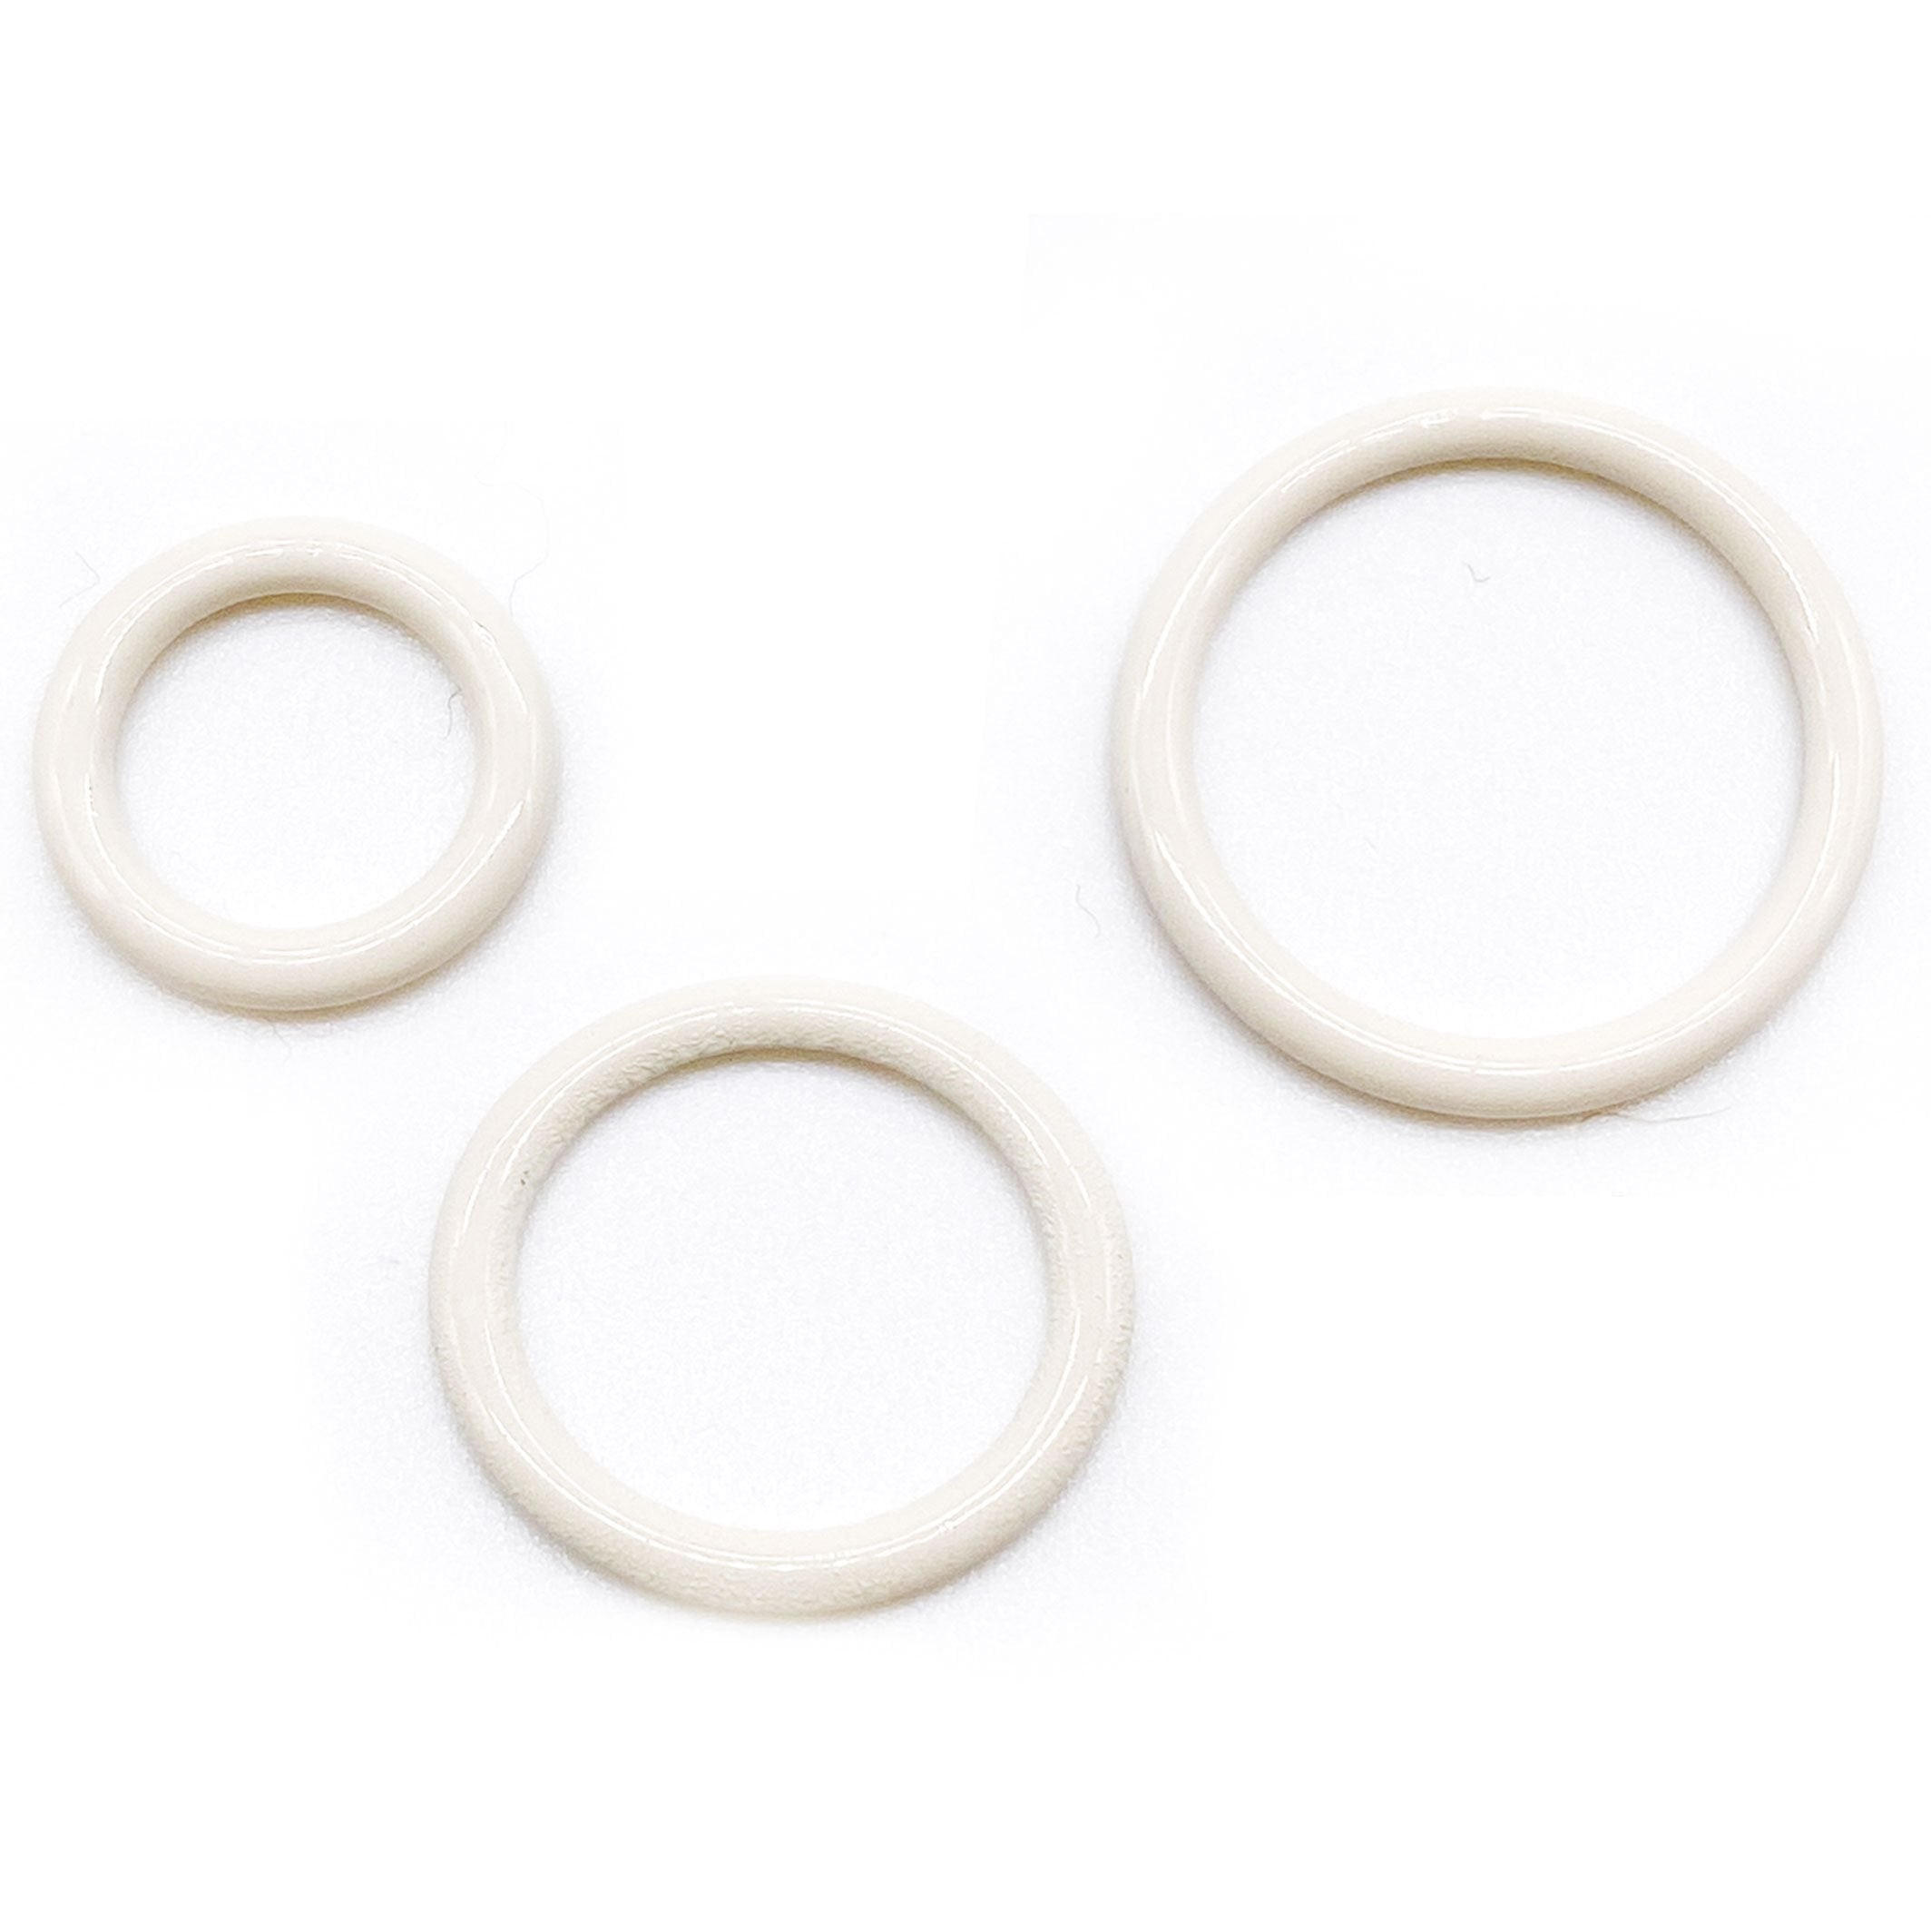 CLEARANCE- Set of 2 Rings OR 2 Sliders Bra Strap Sliders in Elegant Ivory for Bra making or Swimwear - 1/4"/6mm, 3/8"/10mm, 1/2"/12mm-Stitch Love Studio